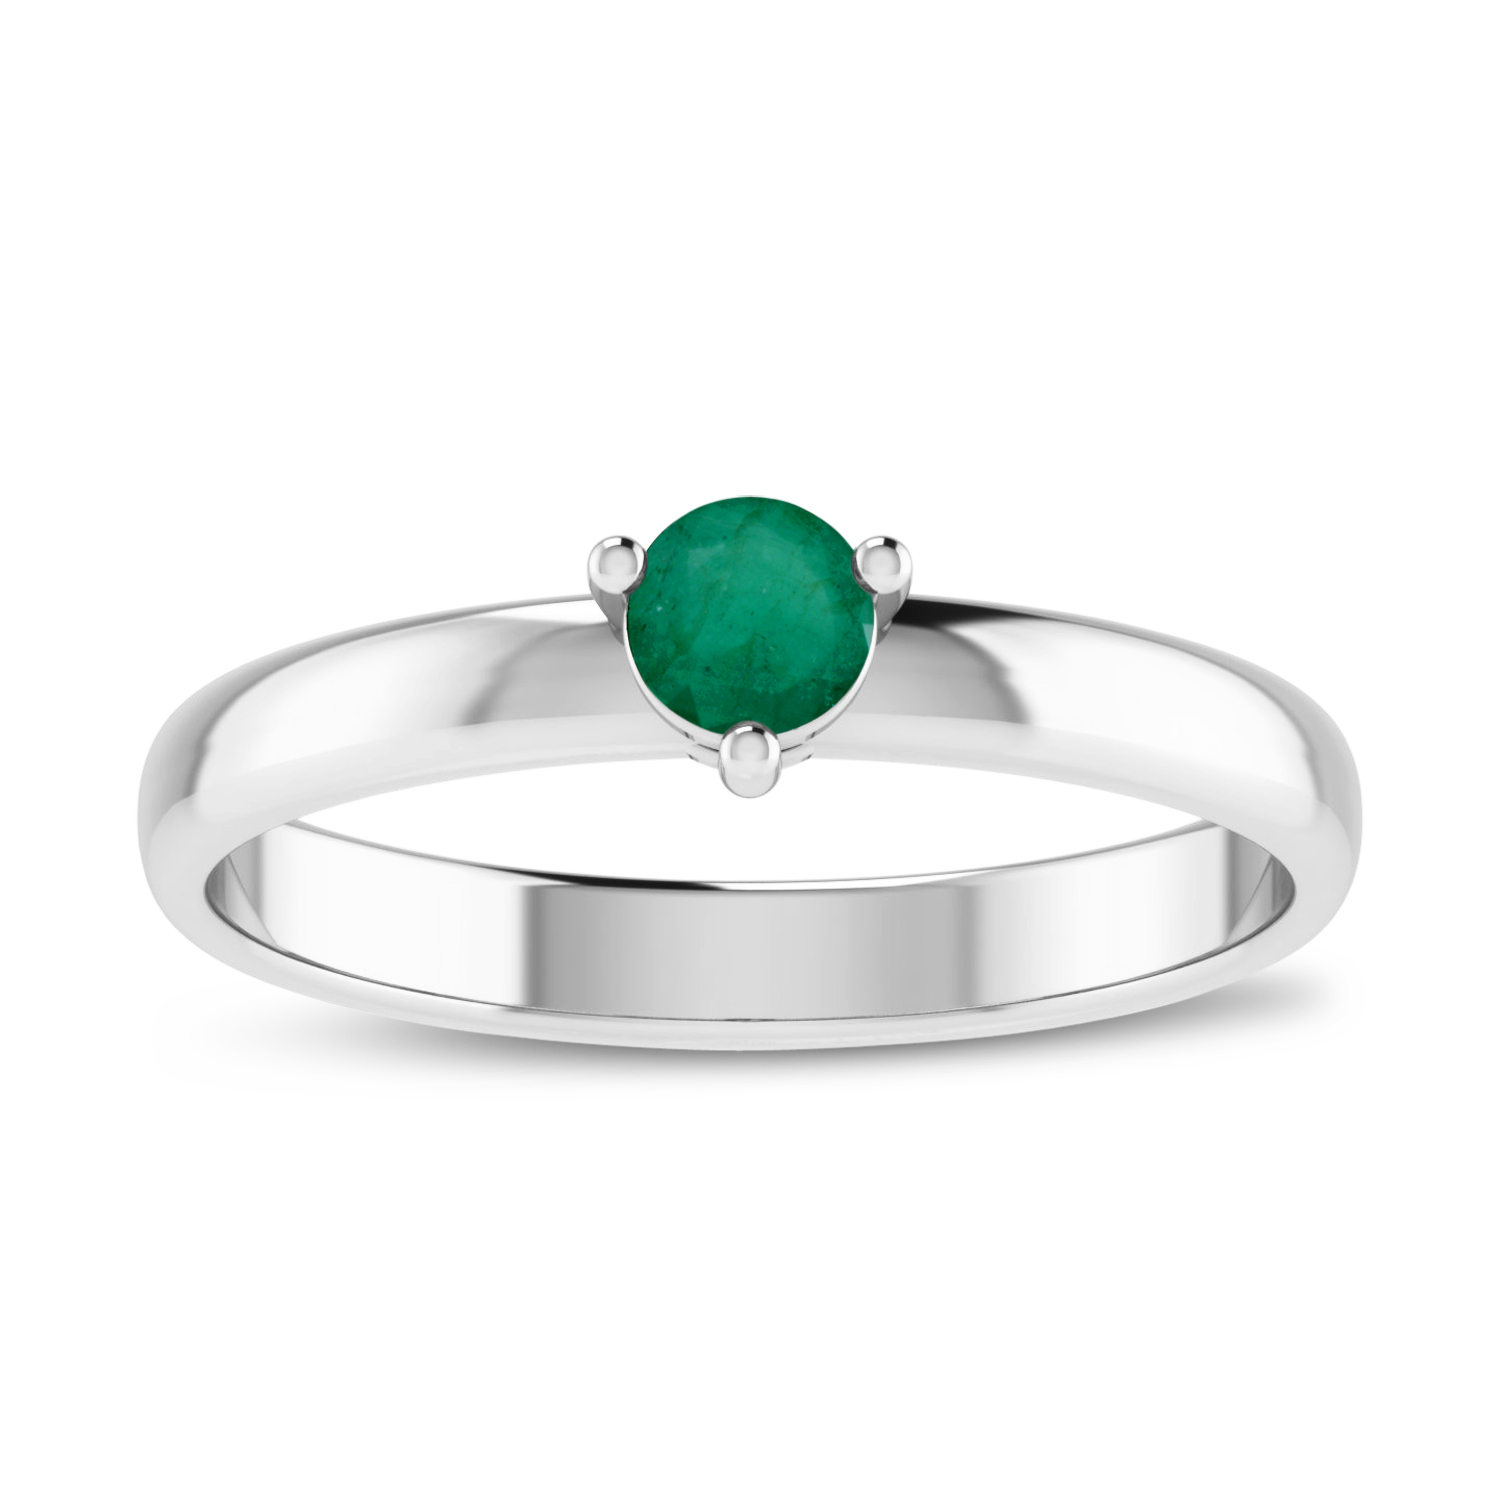 10K White Gold 4mm Round Emerald Birthstone Ring